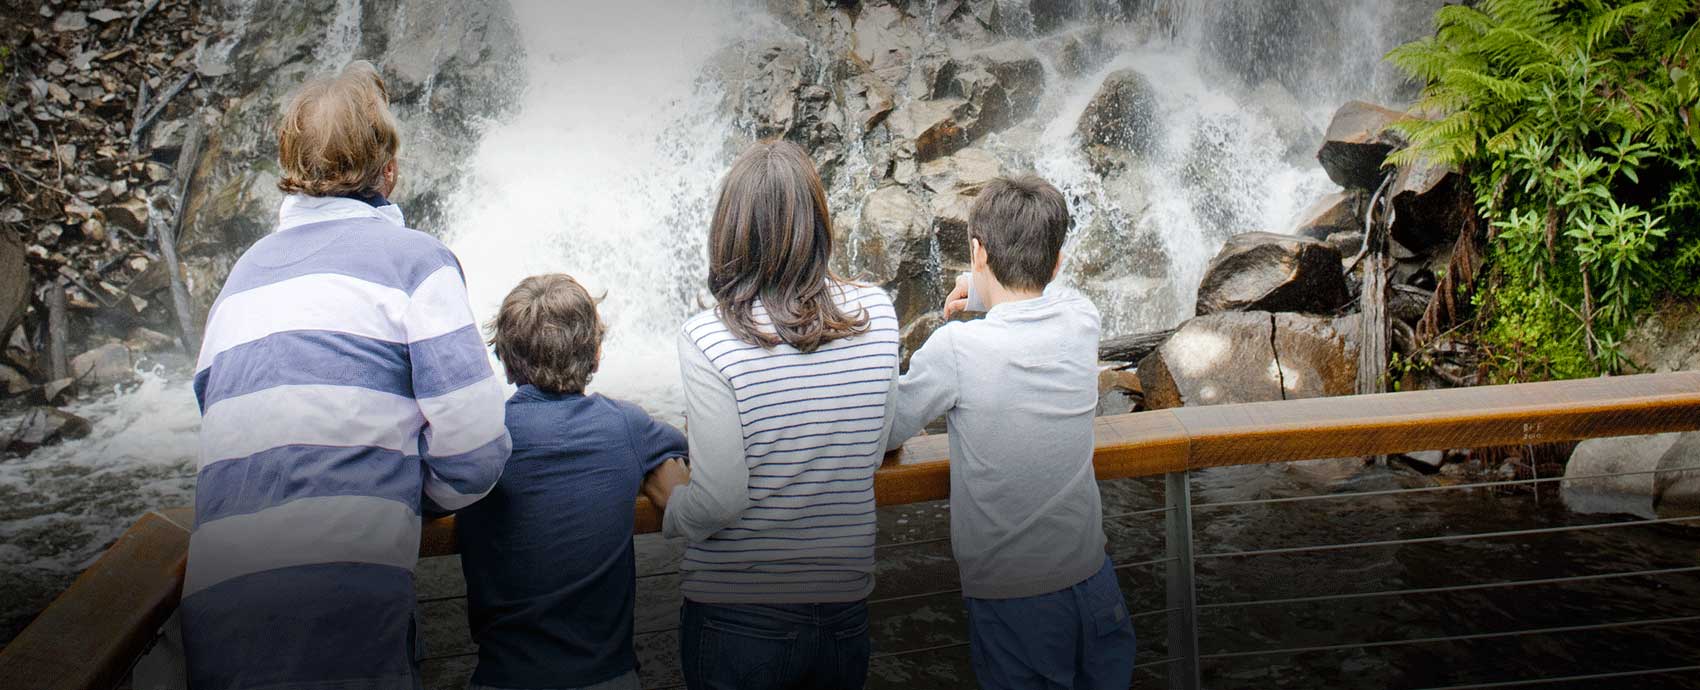 Family at a waterfall in Murrindindi Shire